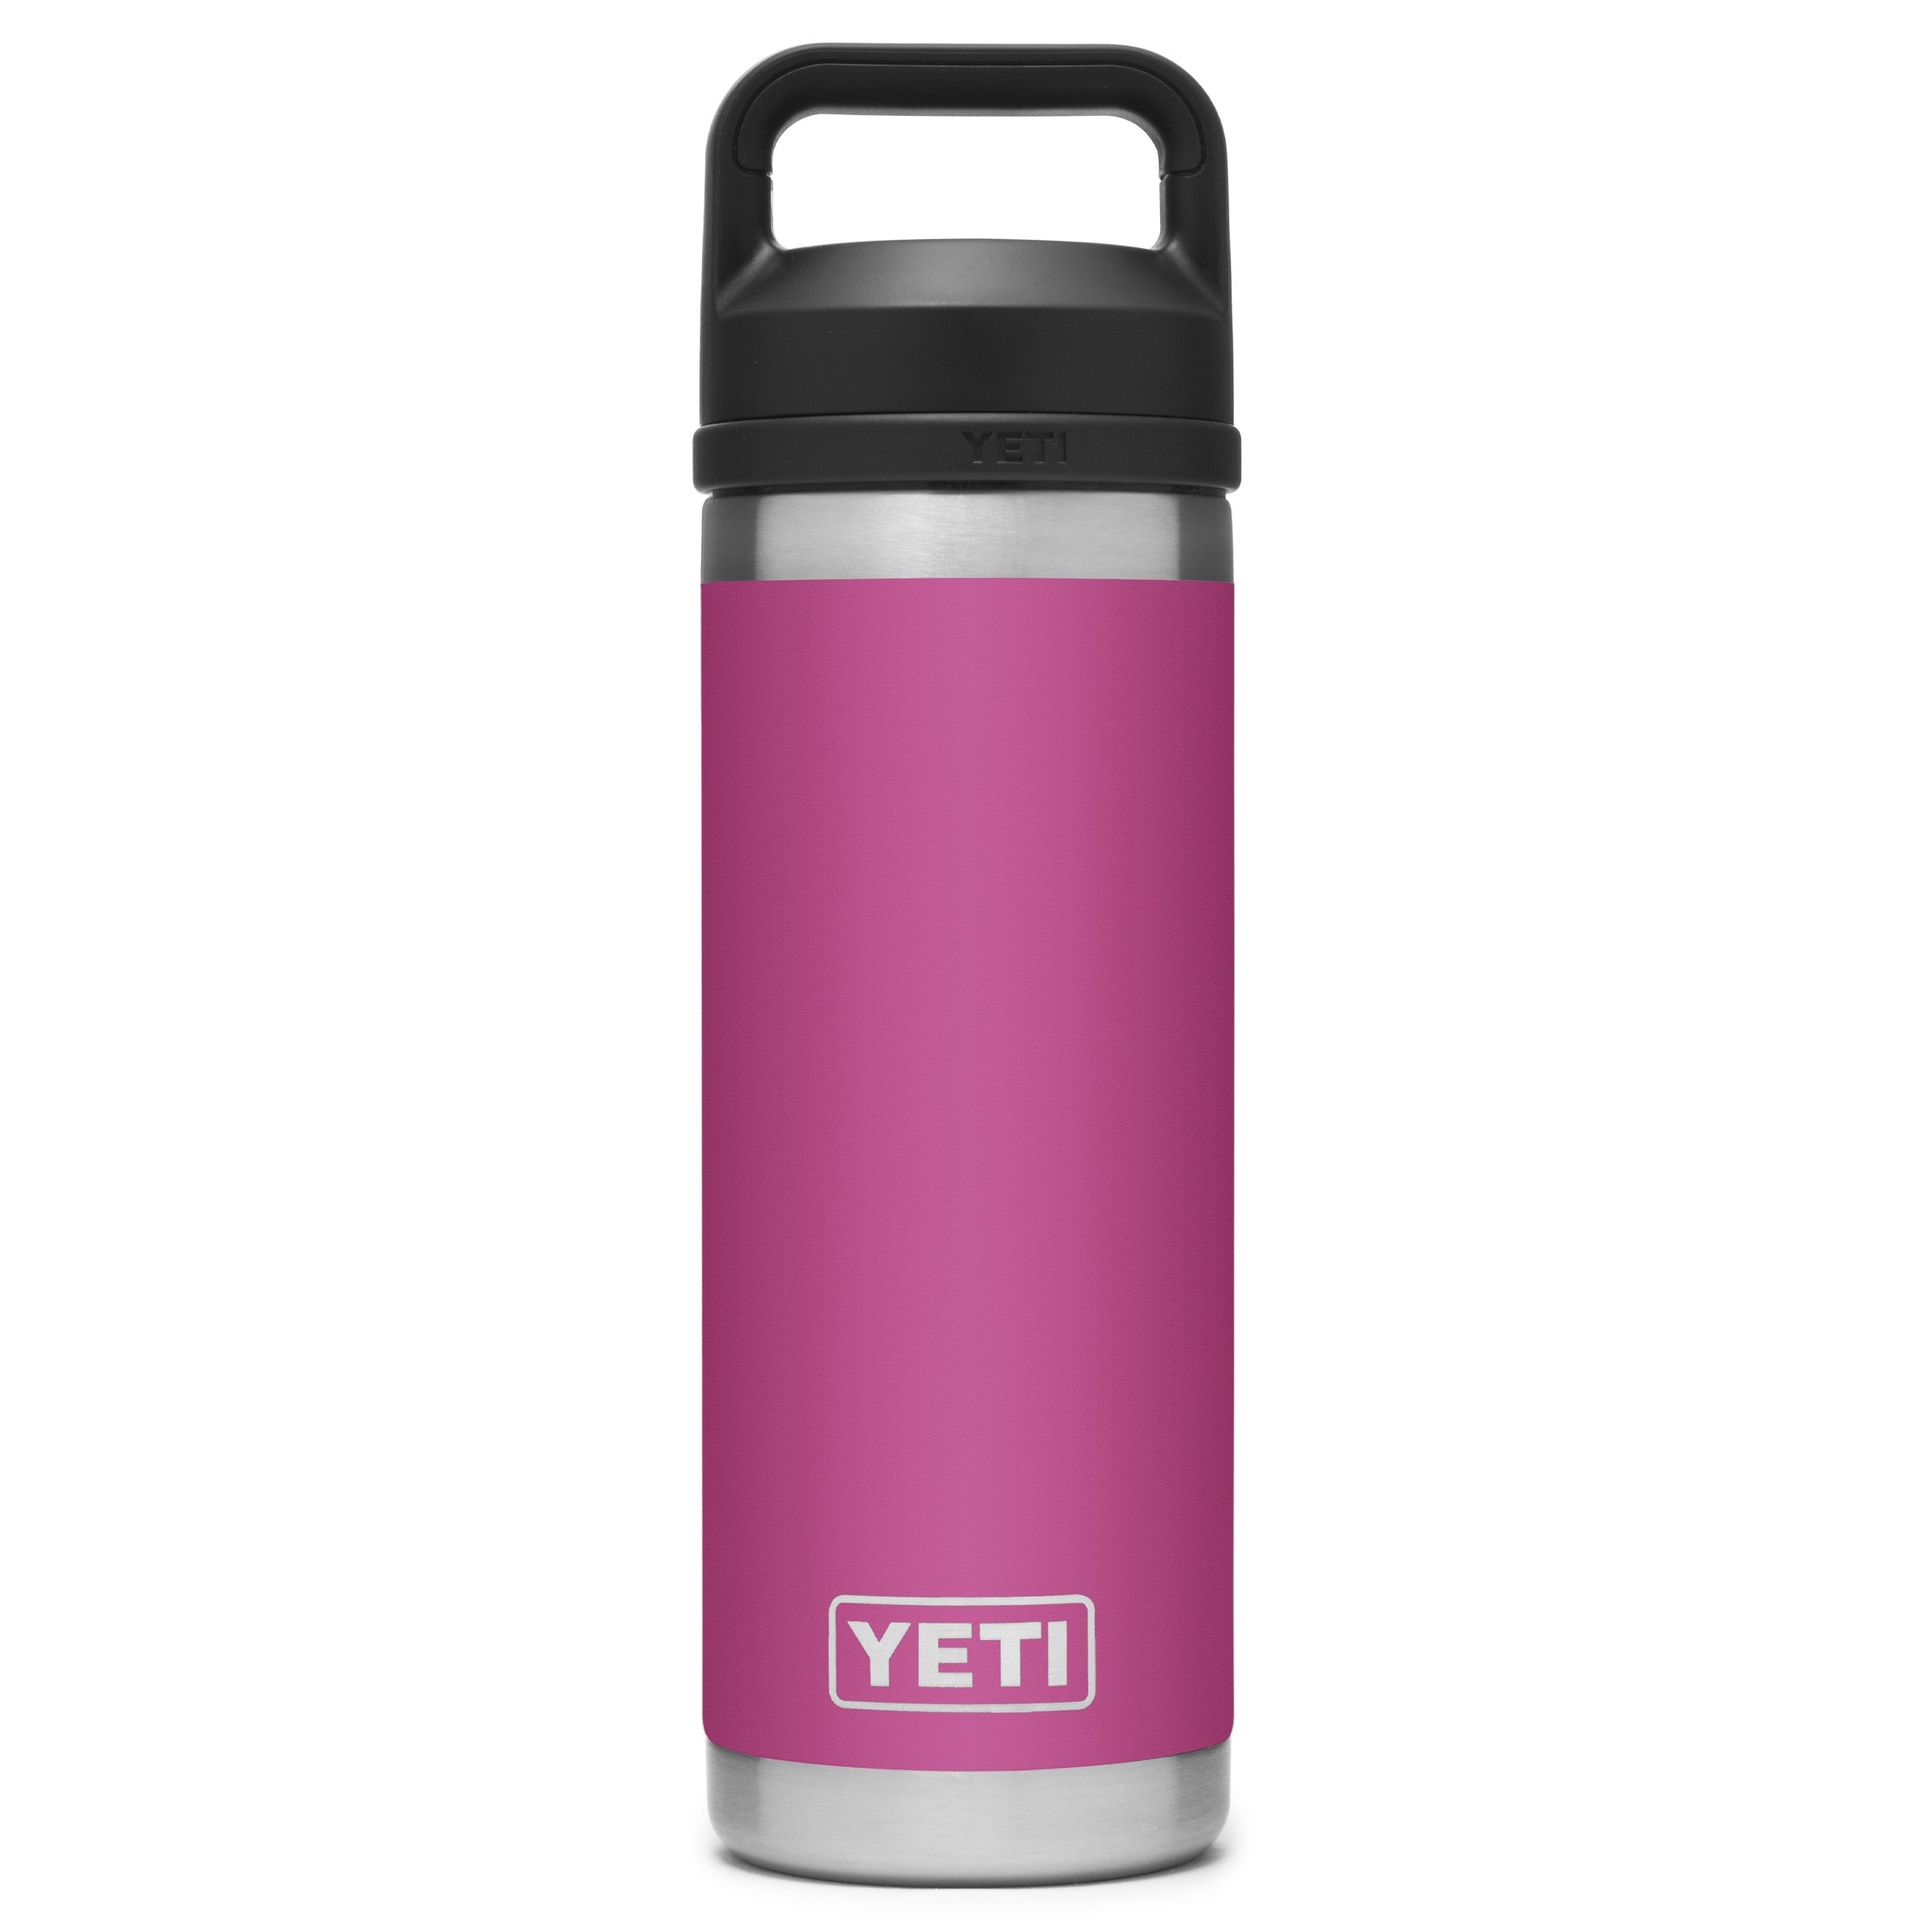 YETI Rambler 18 Oz Water Bottle with Chug Cap in Power Pink